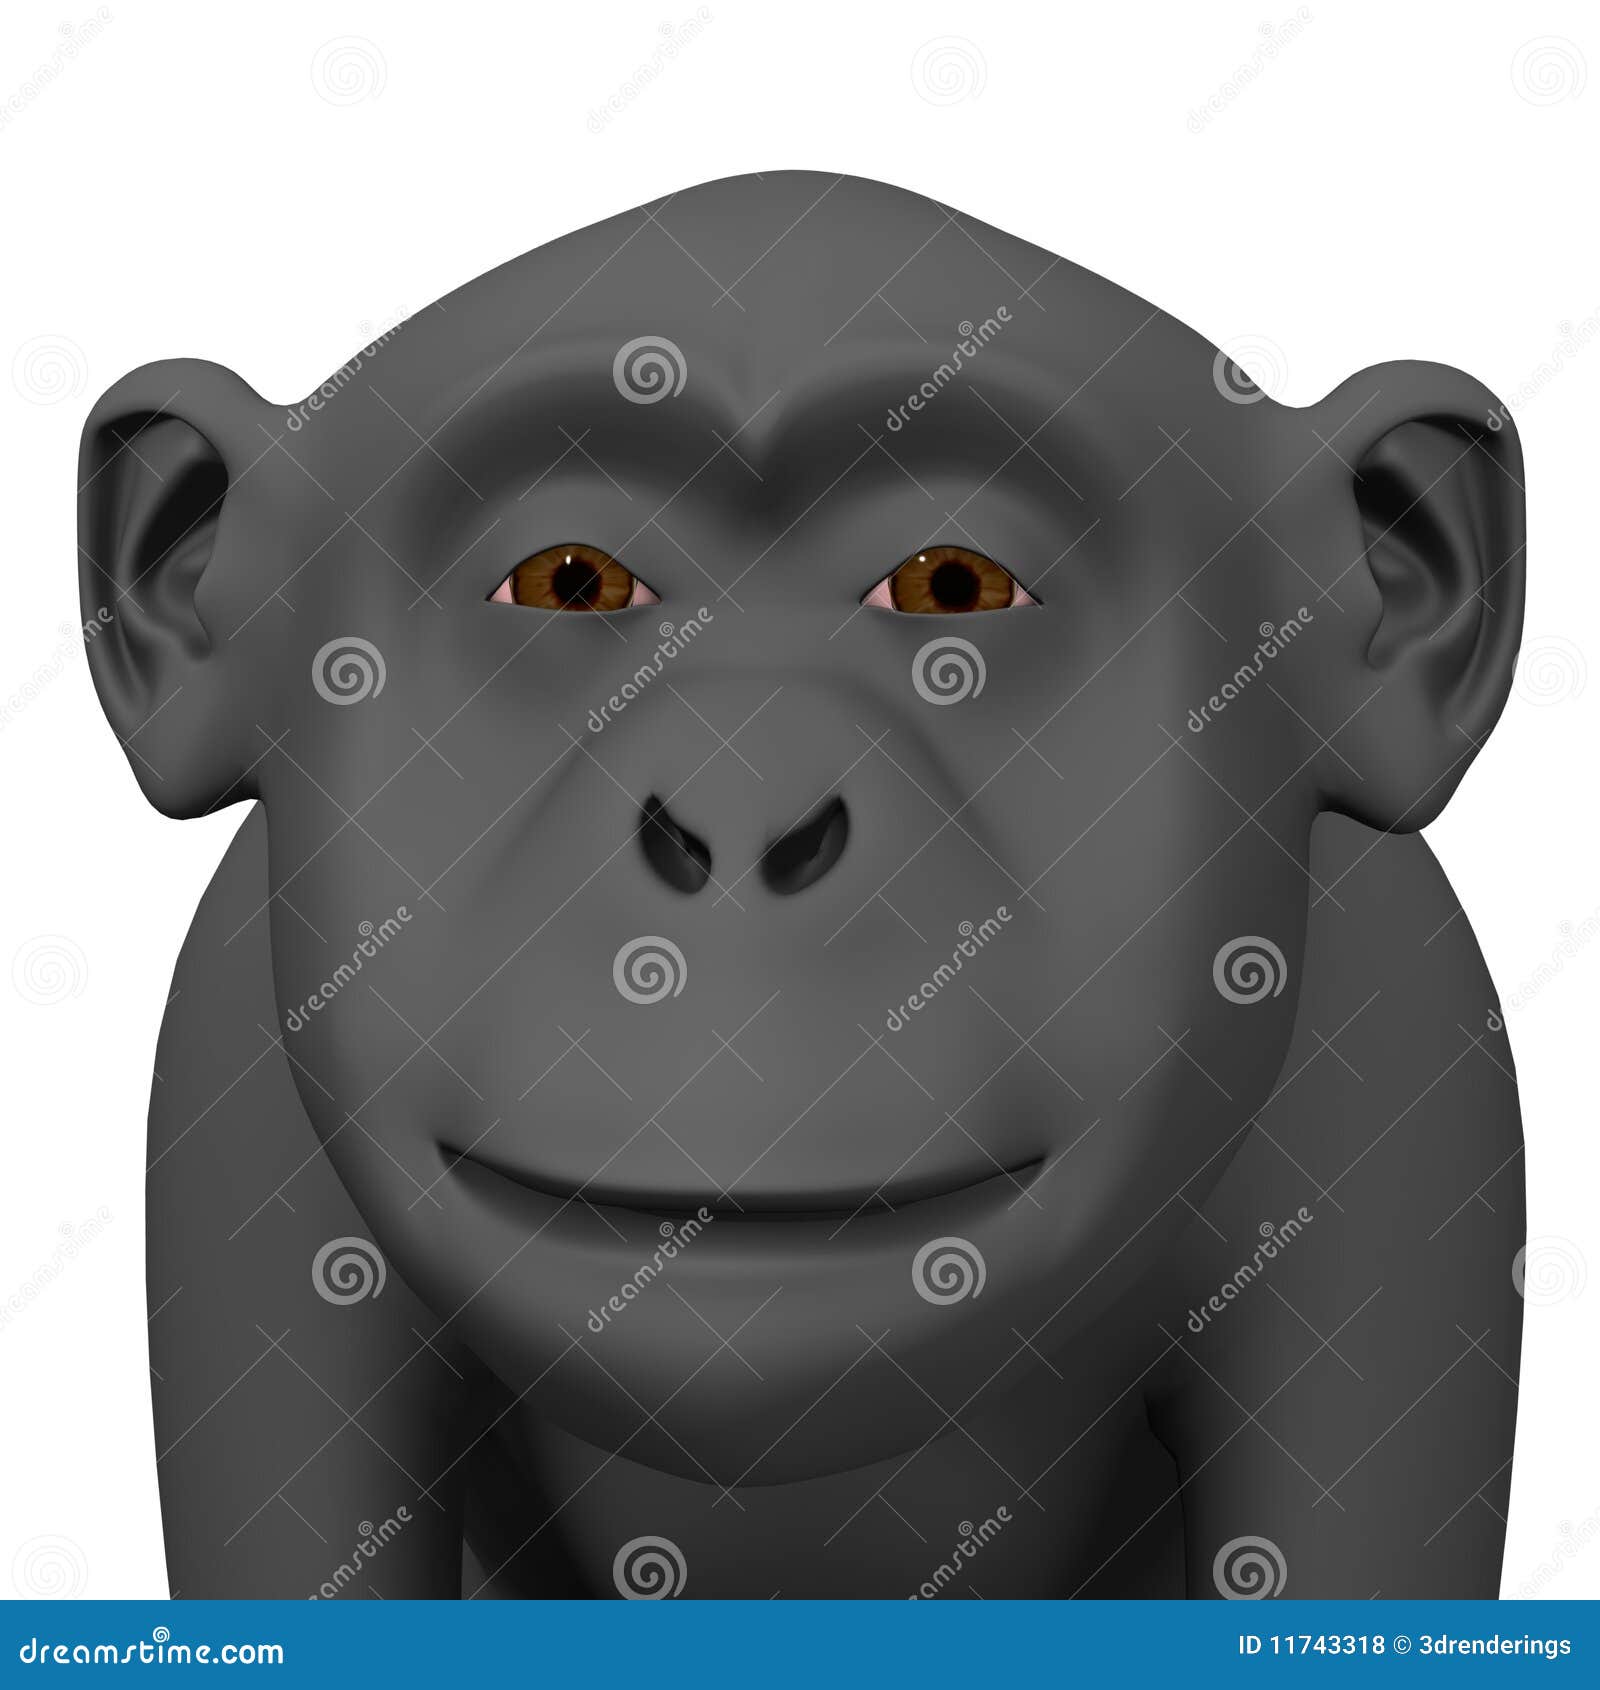 Chimpanzee stock illustration. Illustration of organs - 11743318